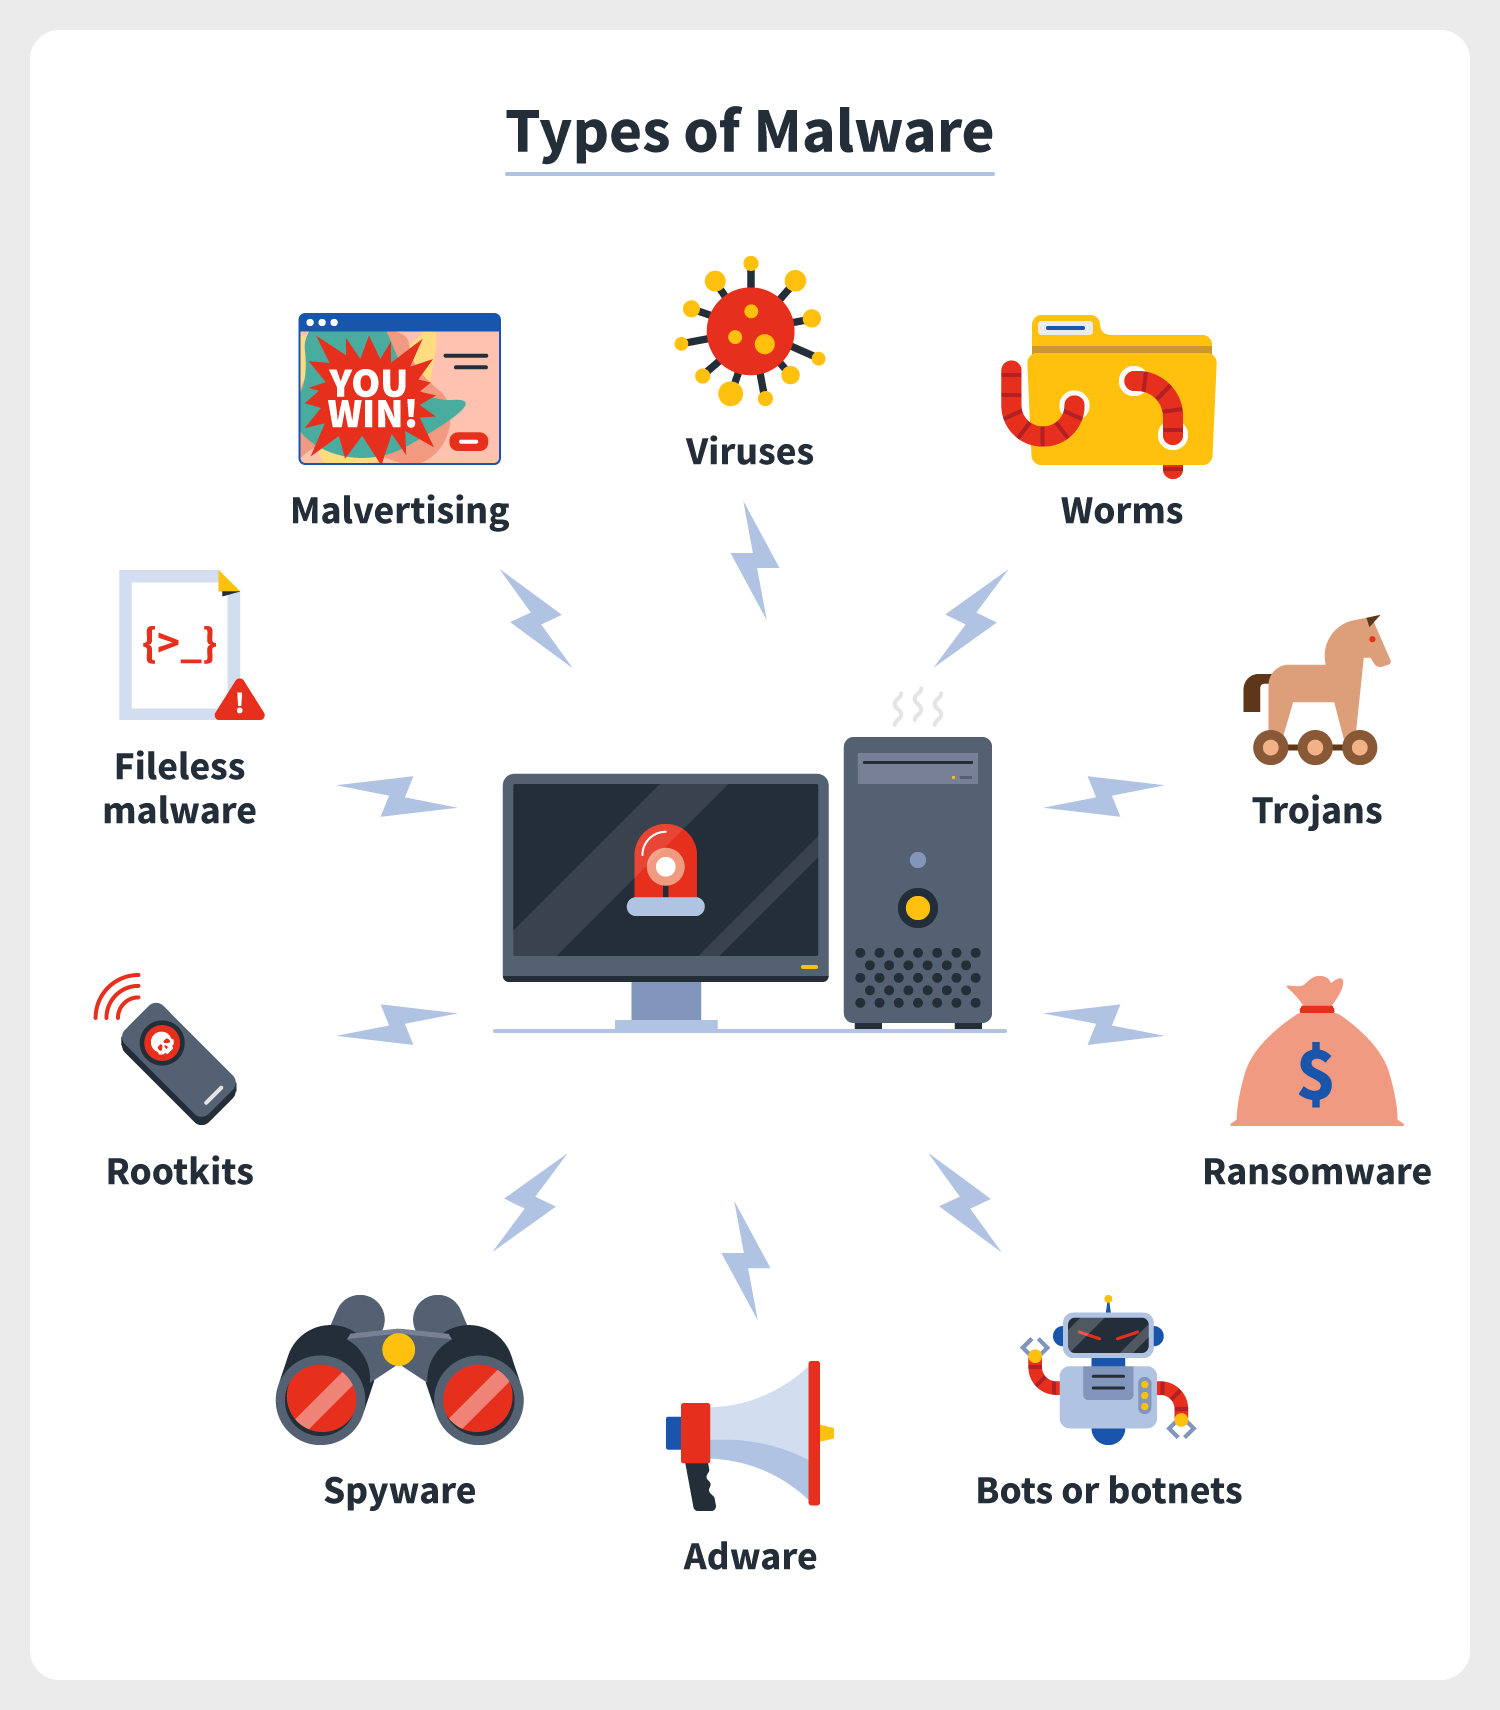 Wallpaper sake, virus, malware images for desktop, section hi-tech -  download